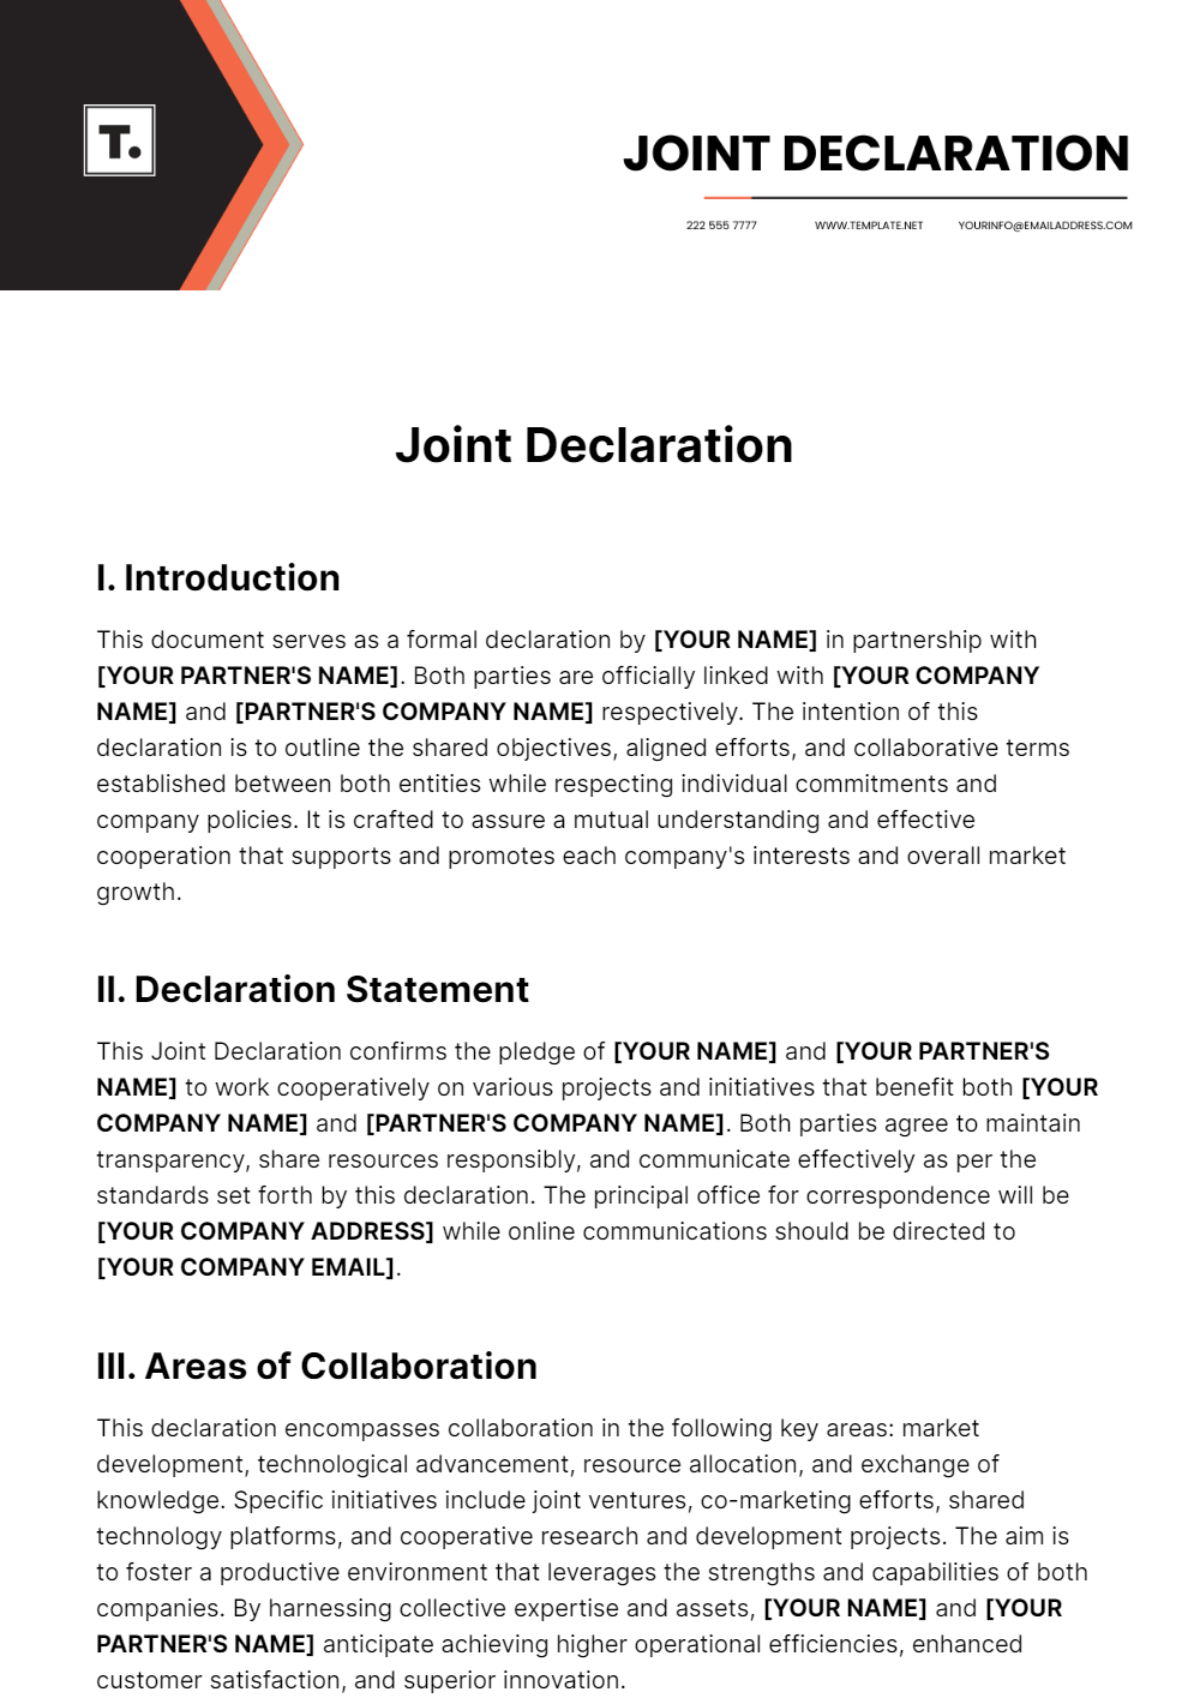 Joint Declaration Template